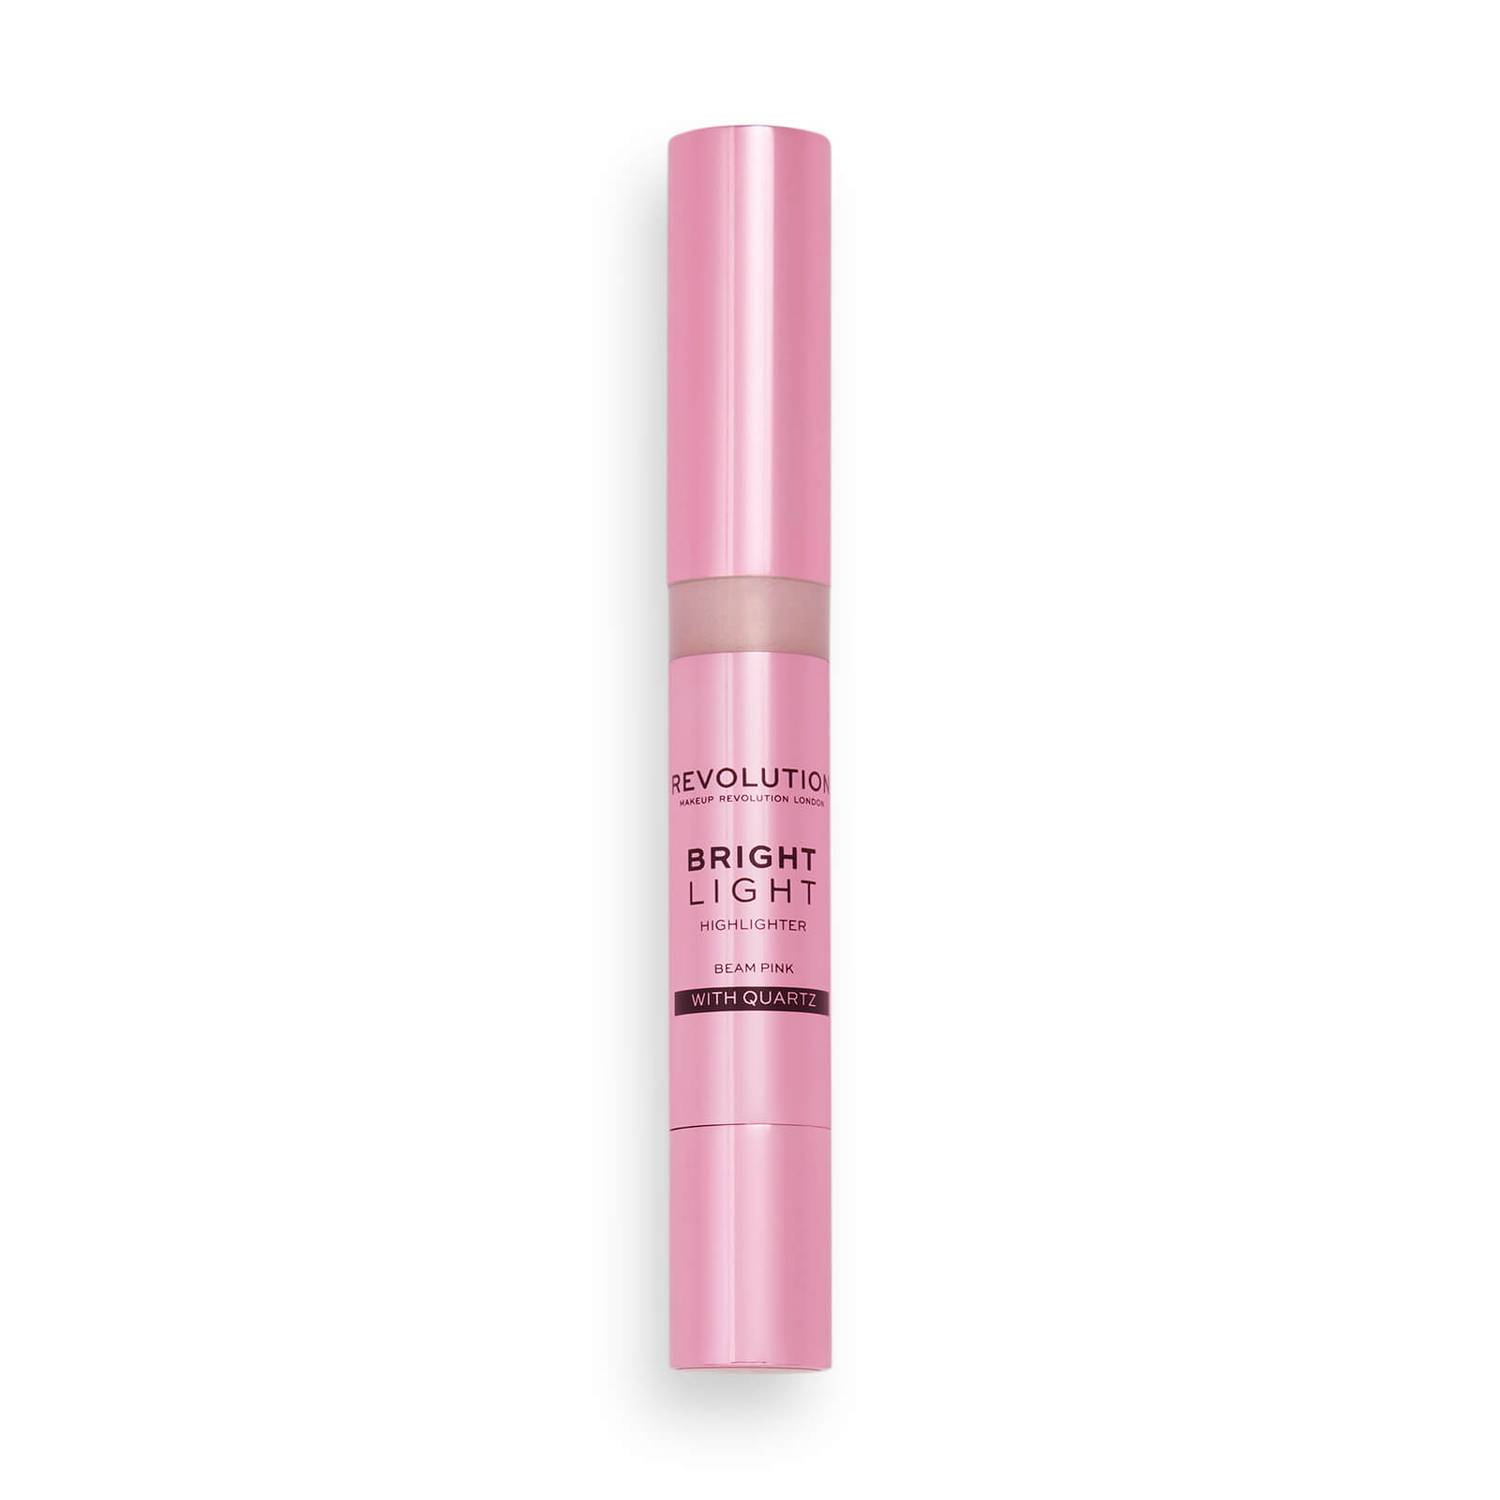 Хайлайтер Makeup Revolution Bright Light Highlighter 3ml, Beam Pink пуховка с блёстками для естественного сияния кожи shine bright